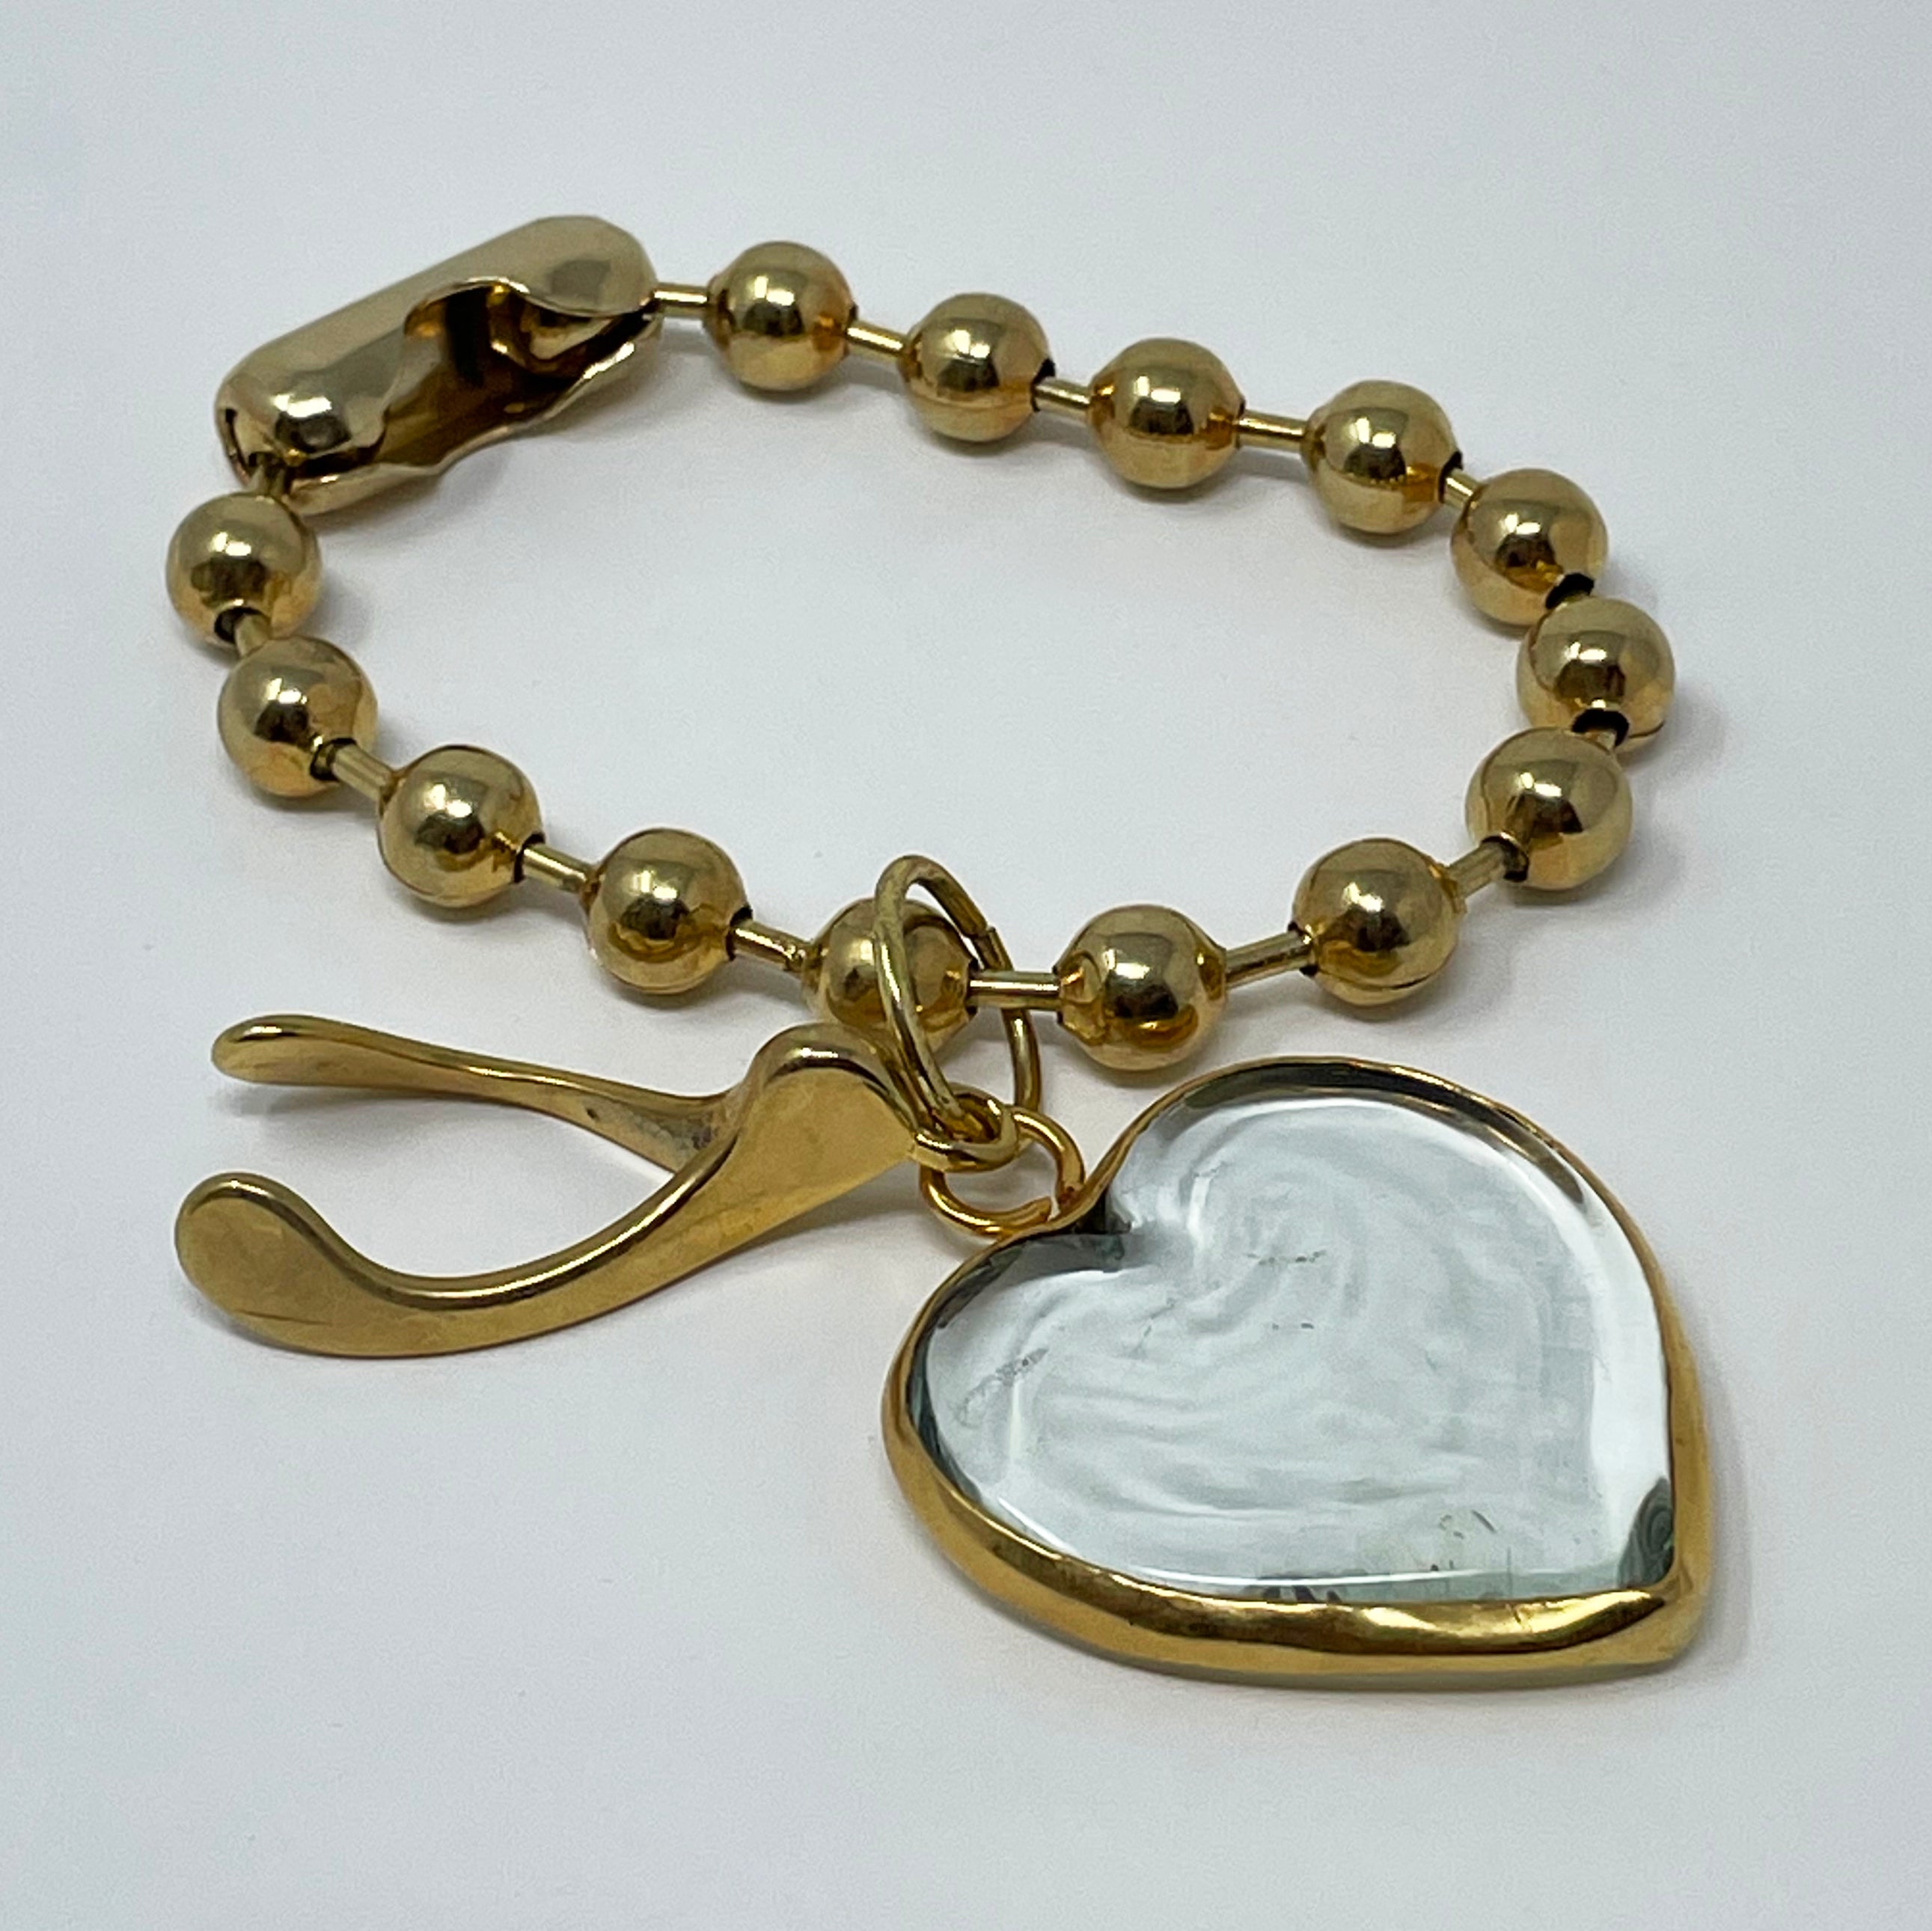 Gold Military Chain Bangle Bracelet - Customizable Charms